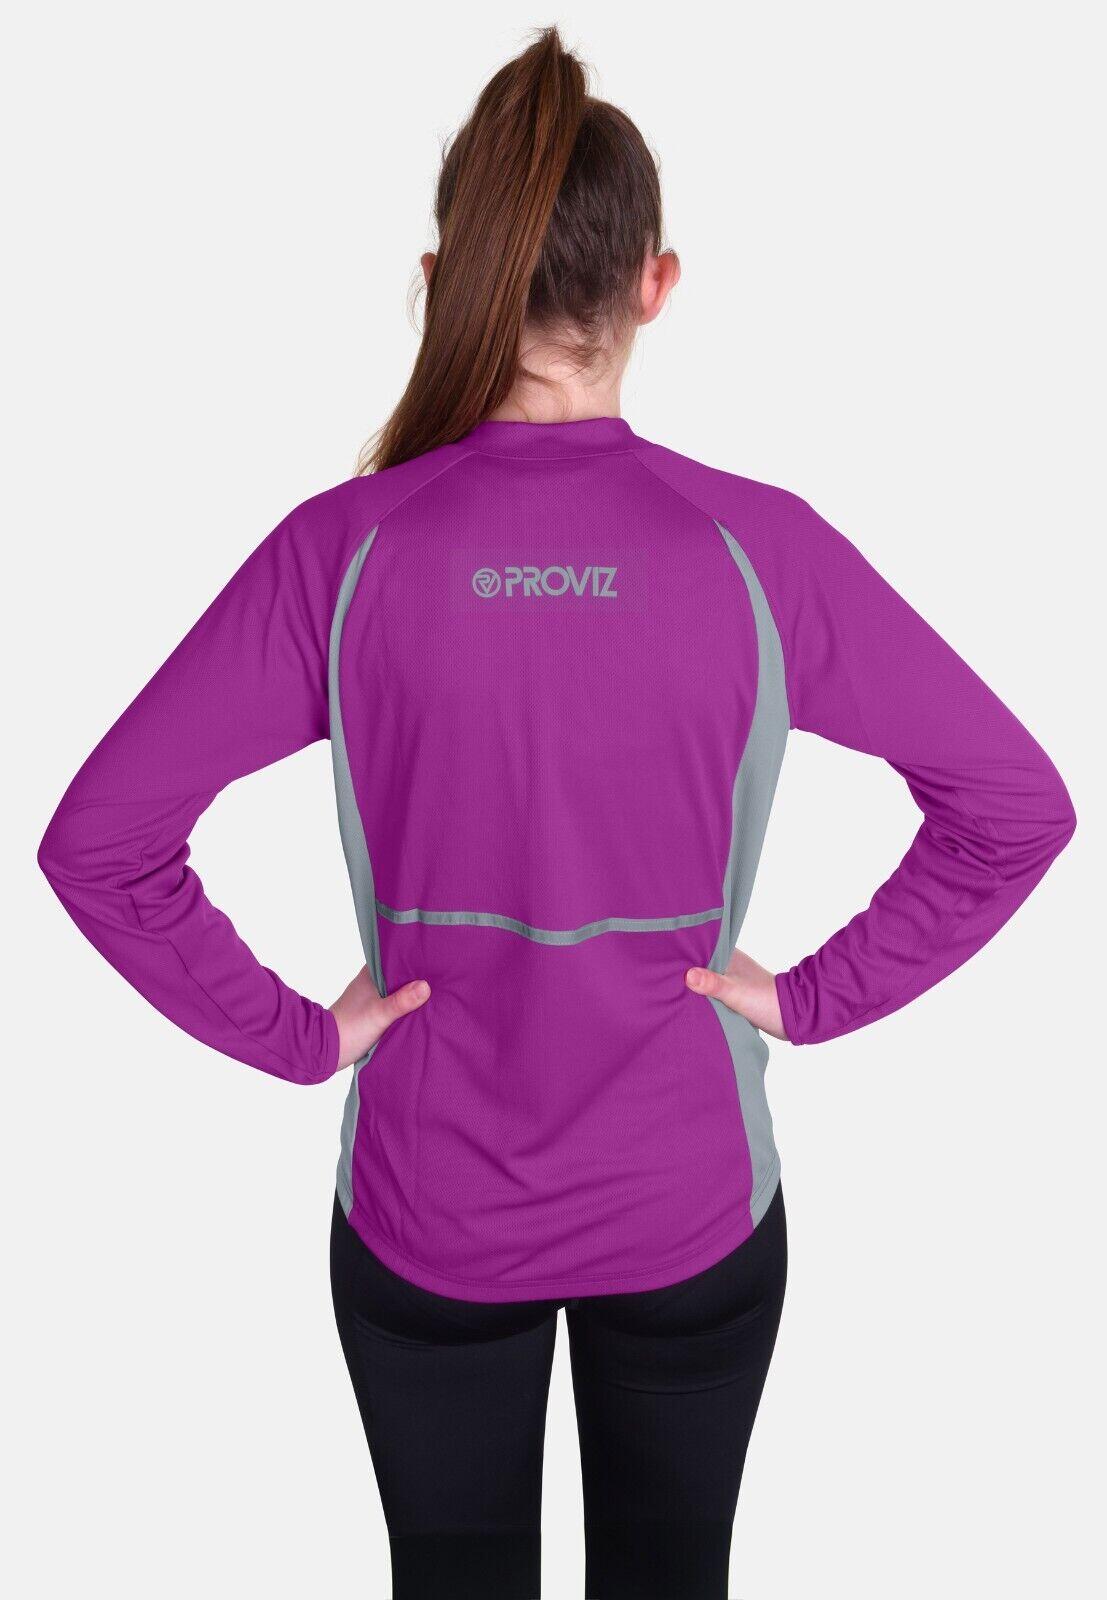 Proviz Classic Womens Sports T-Shirt Long Sleeve Reflective Activewear Top 4/6